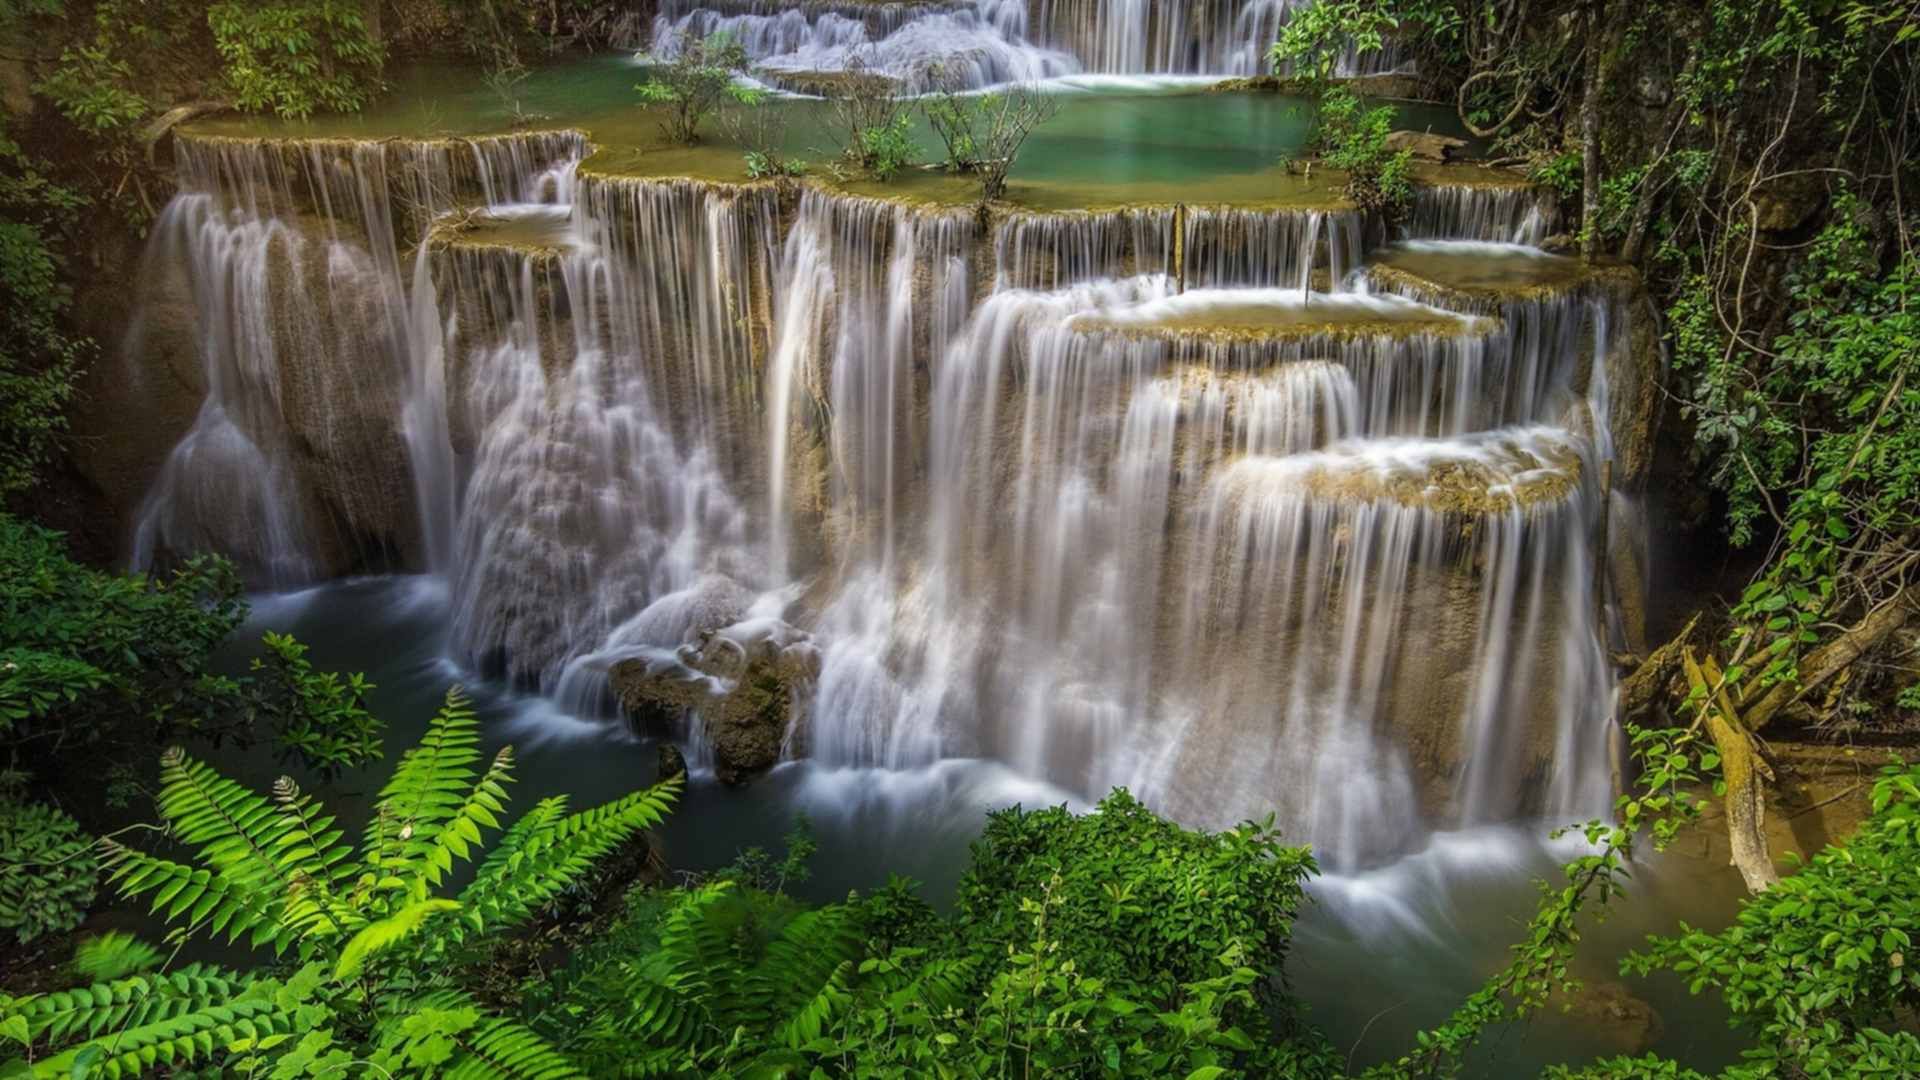 Ступенчатый водопад